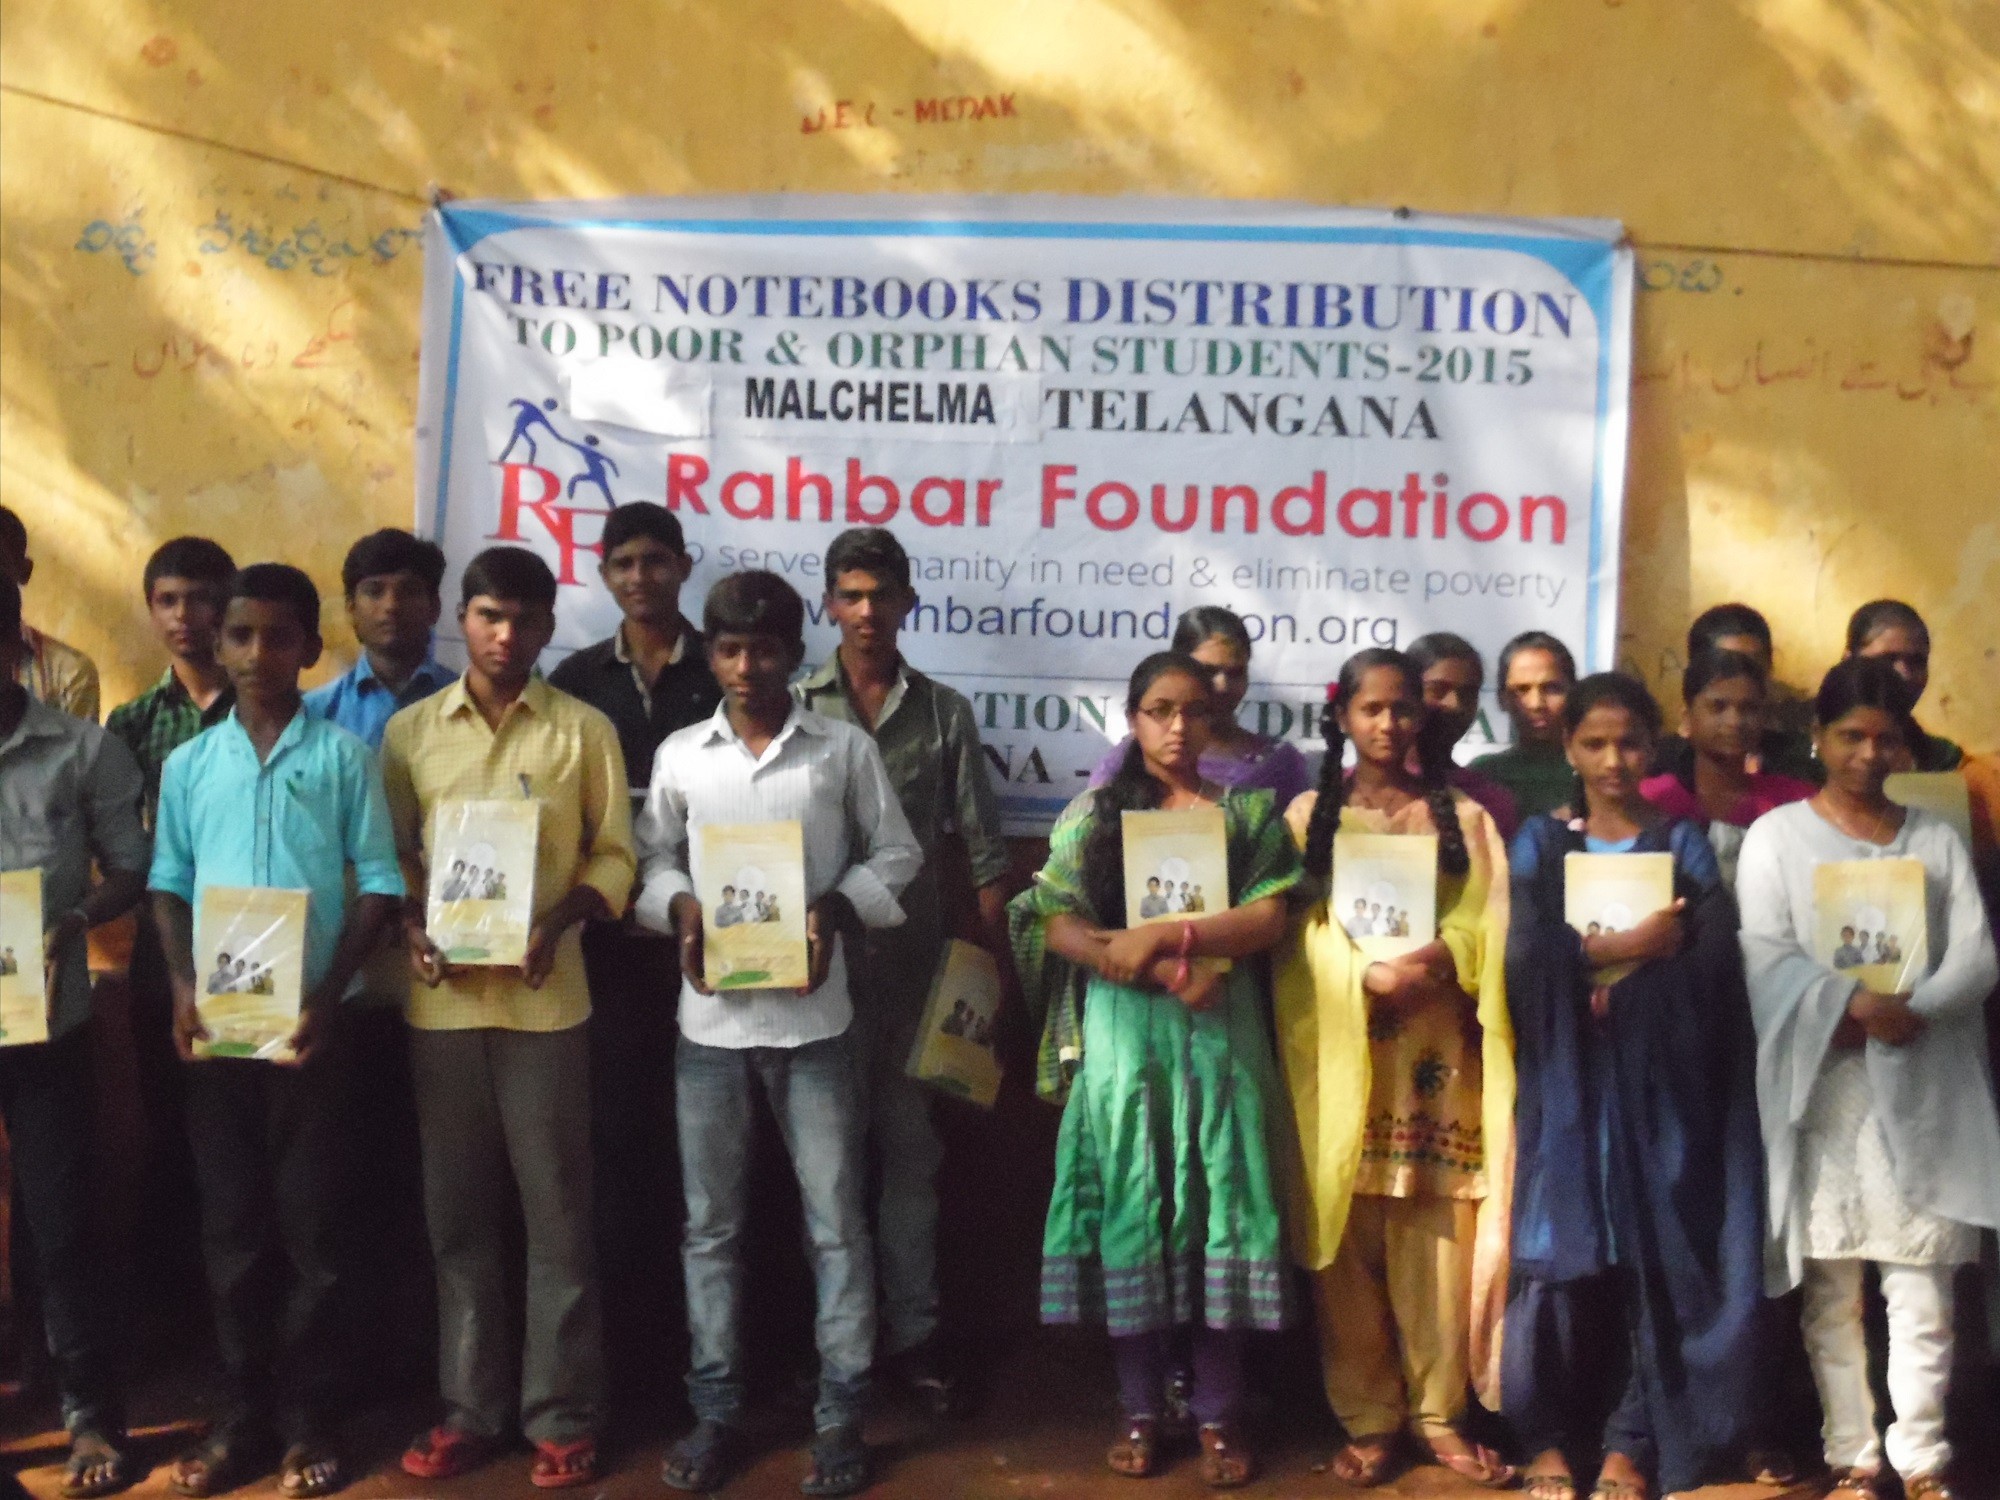 Free Notebooks distribution at Malchelma, Telangana